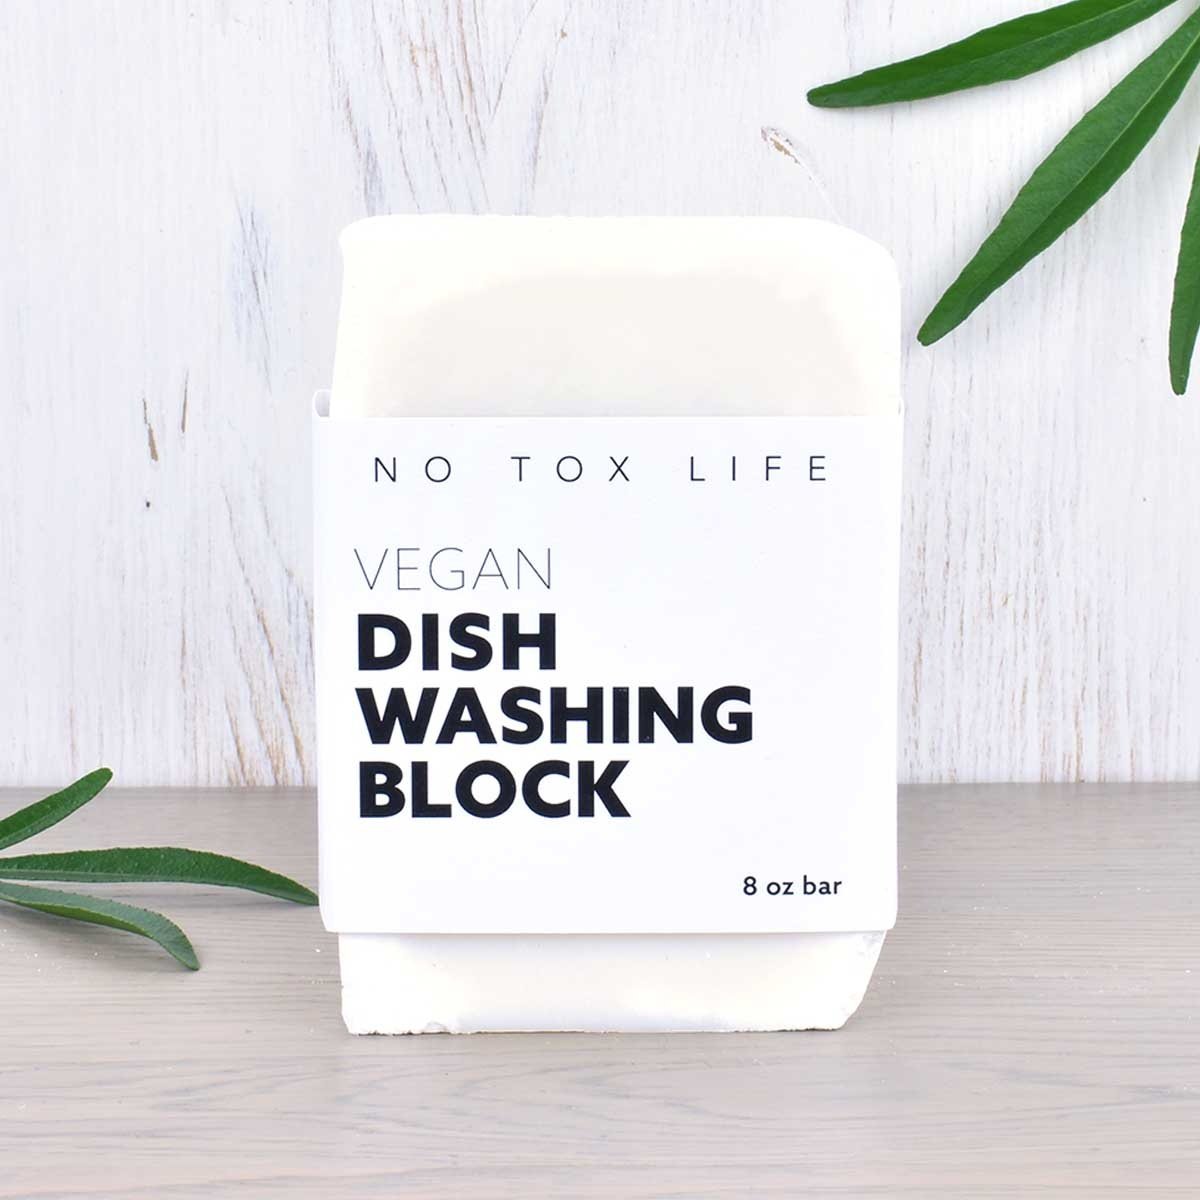 https://www.peacewiththewild.co.uk/wp-content/uploads/2019/02/zero-waste-dish-washing-block-no-tox-life.jpg